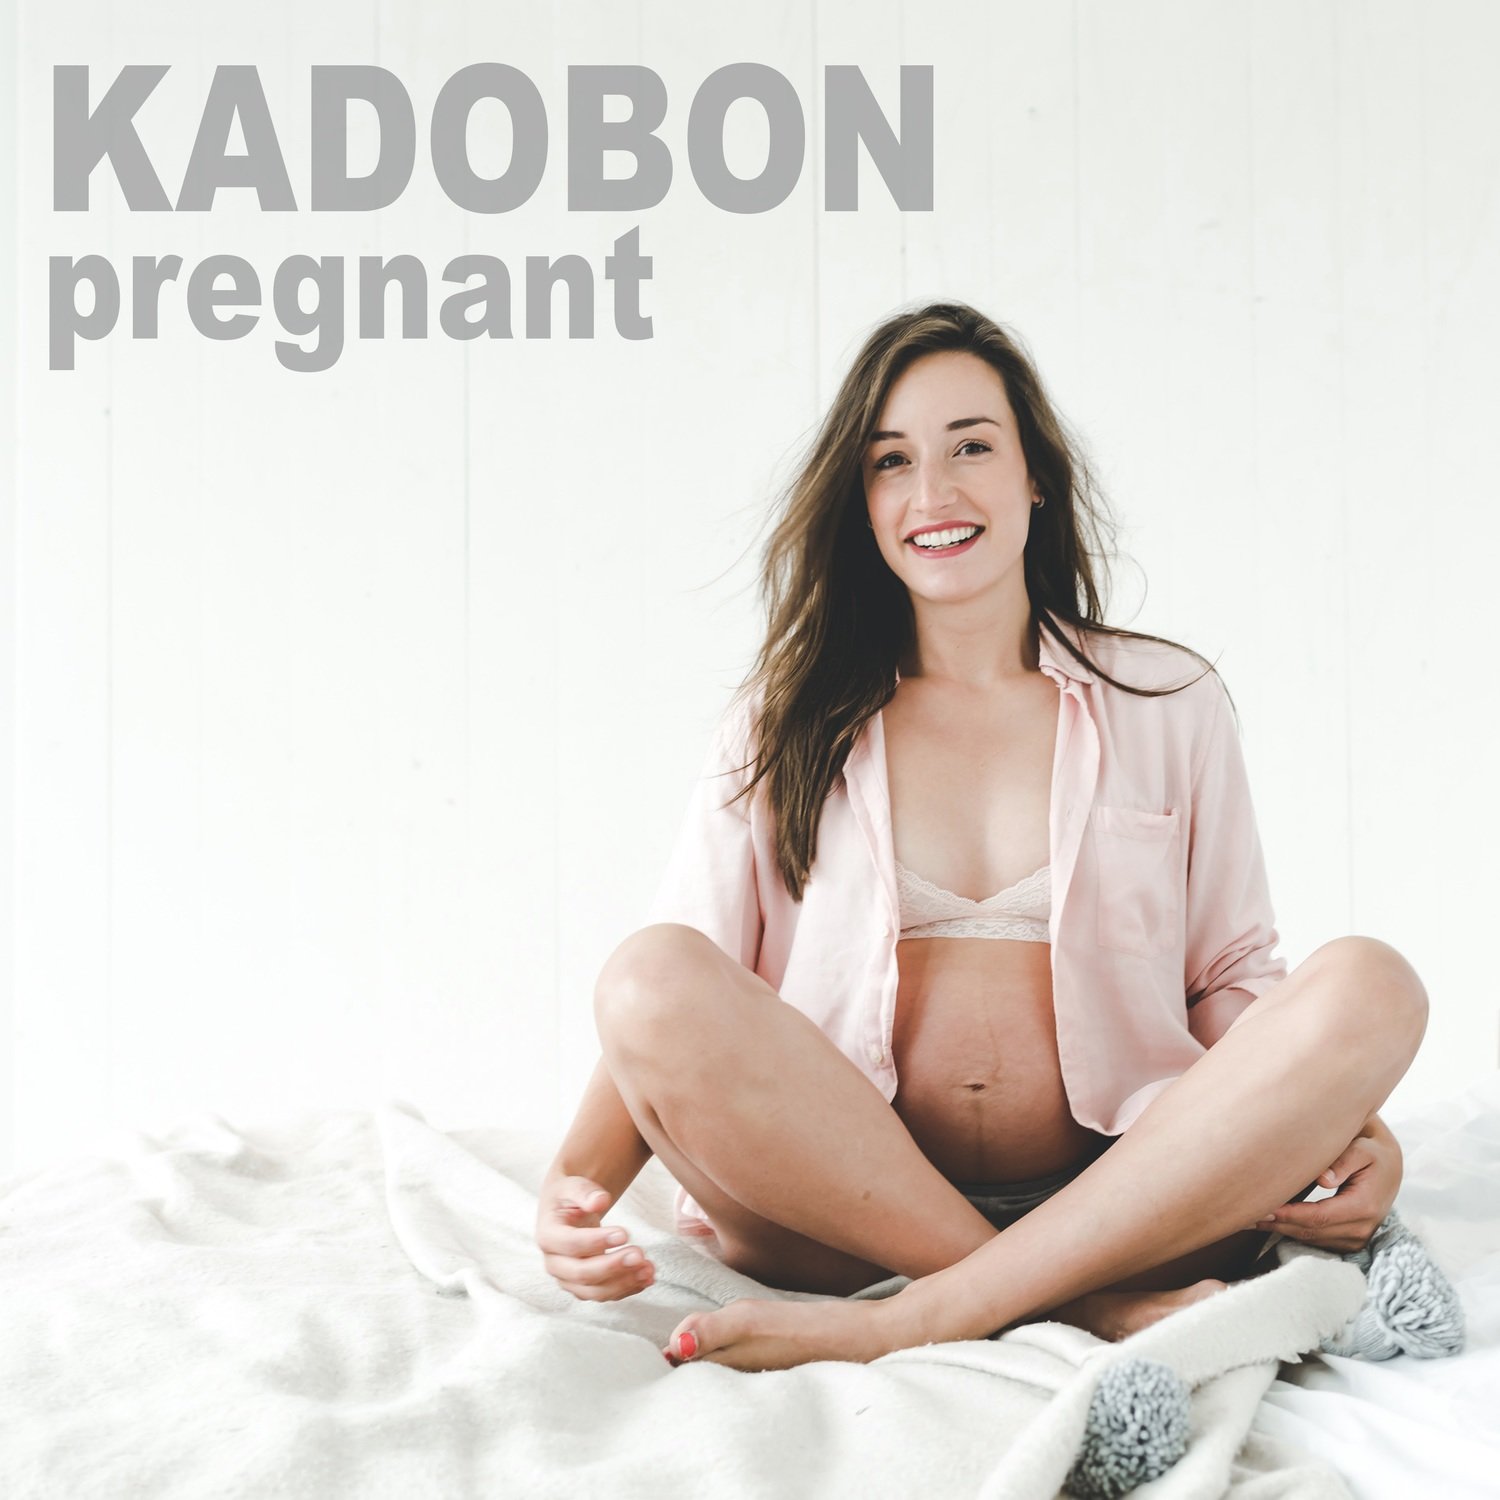 Kadobon fotoshoot pregnant (1 pers.)